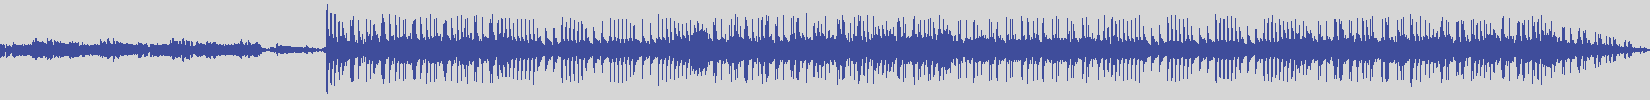 digiphonic_records [DPR013] Little Tony - Bandito [Original Mix] audio wave form